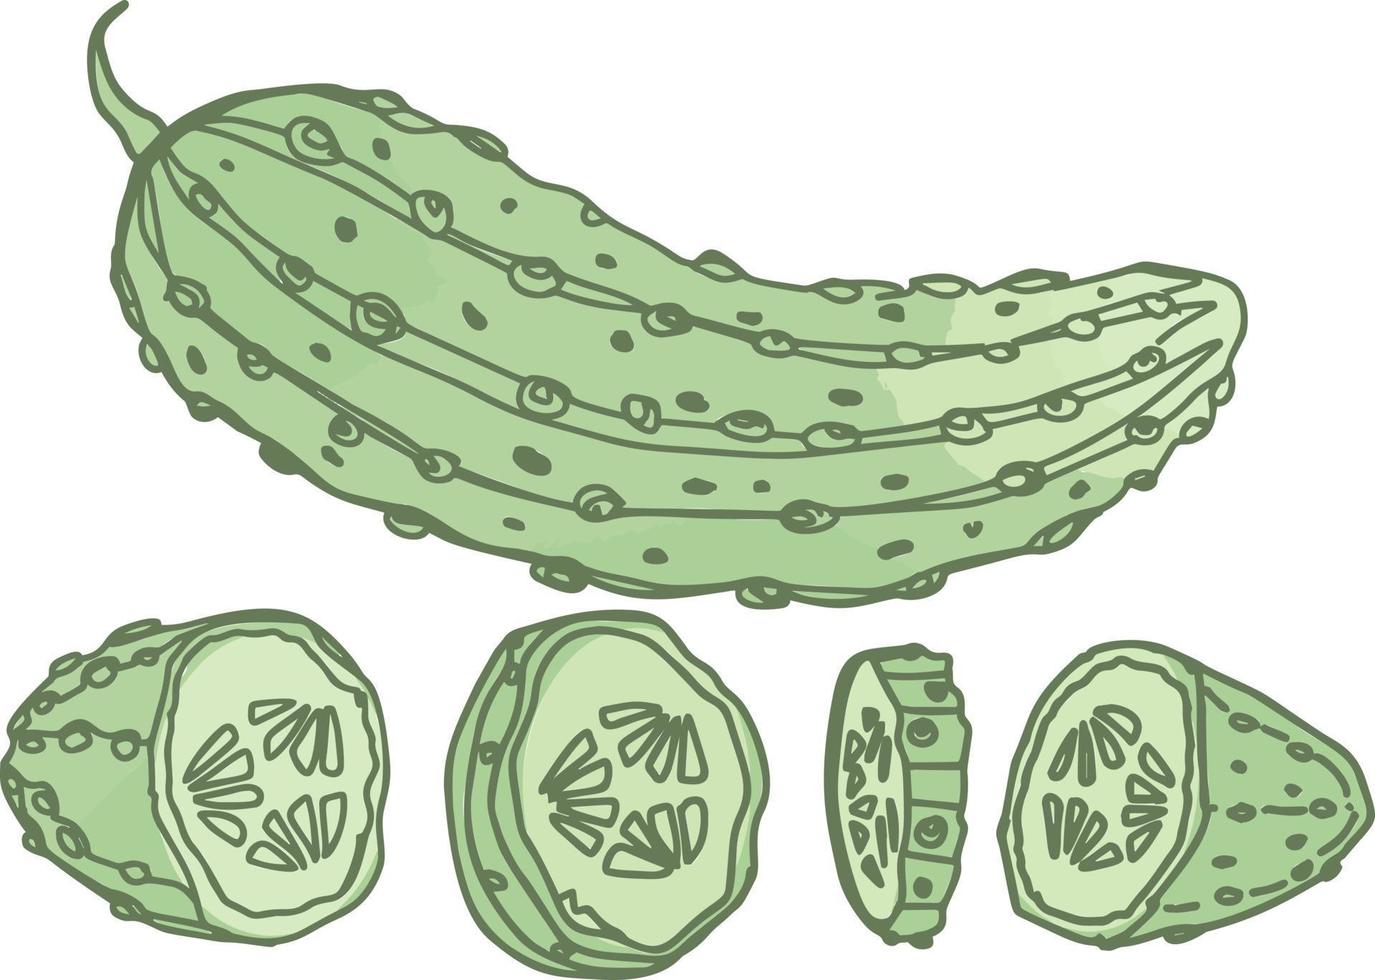 grüne frische gurke leckeres gemüseessen vektor